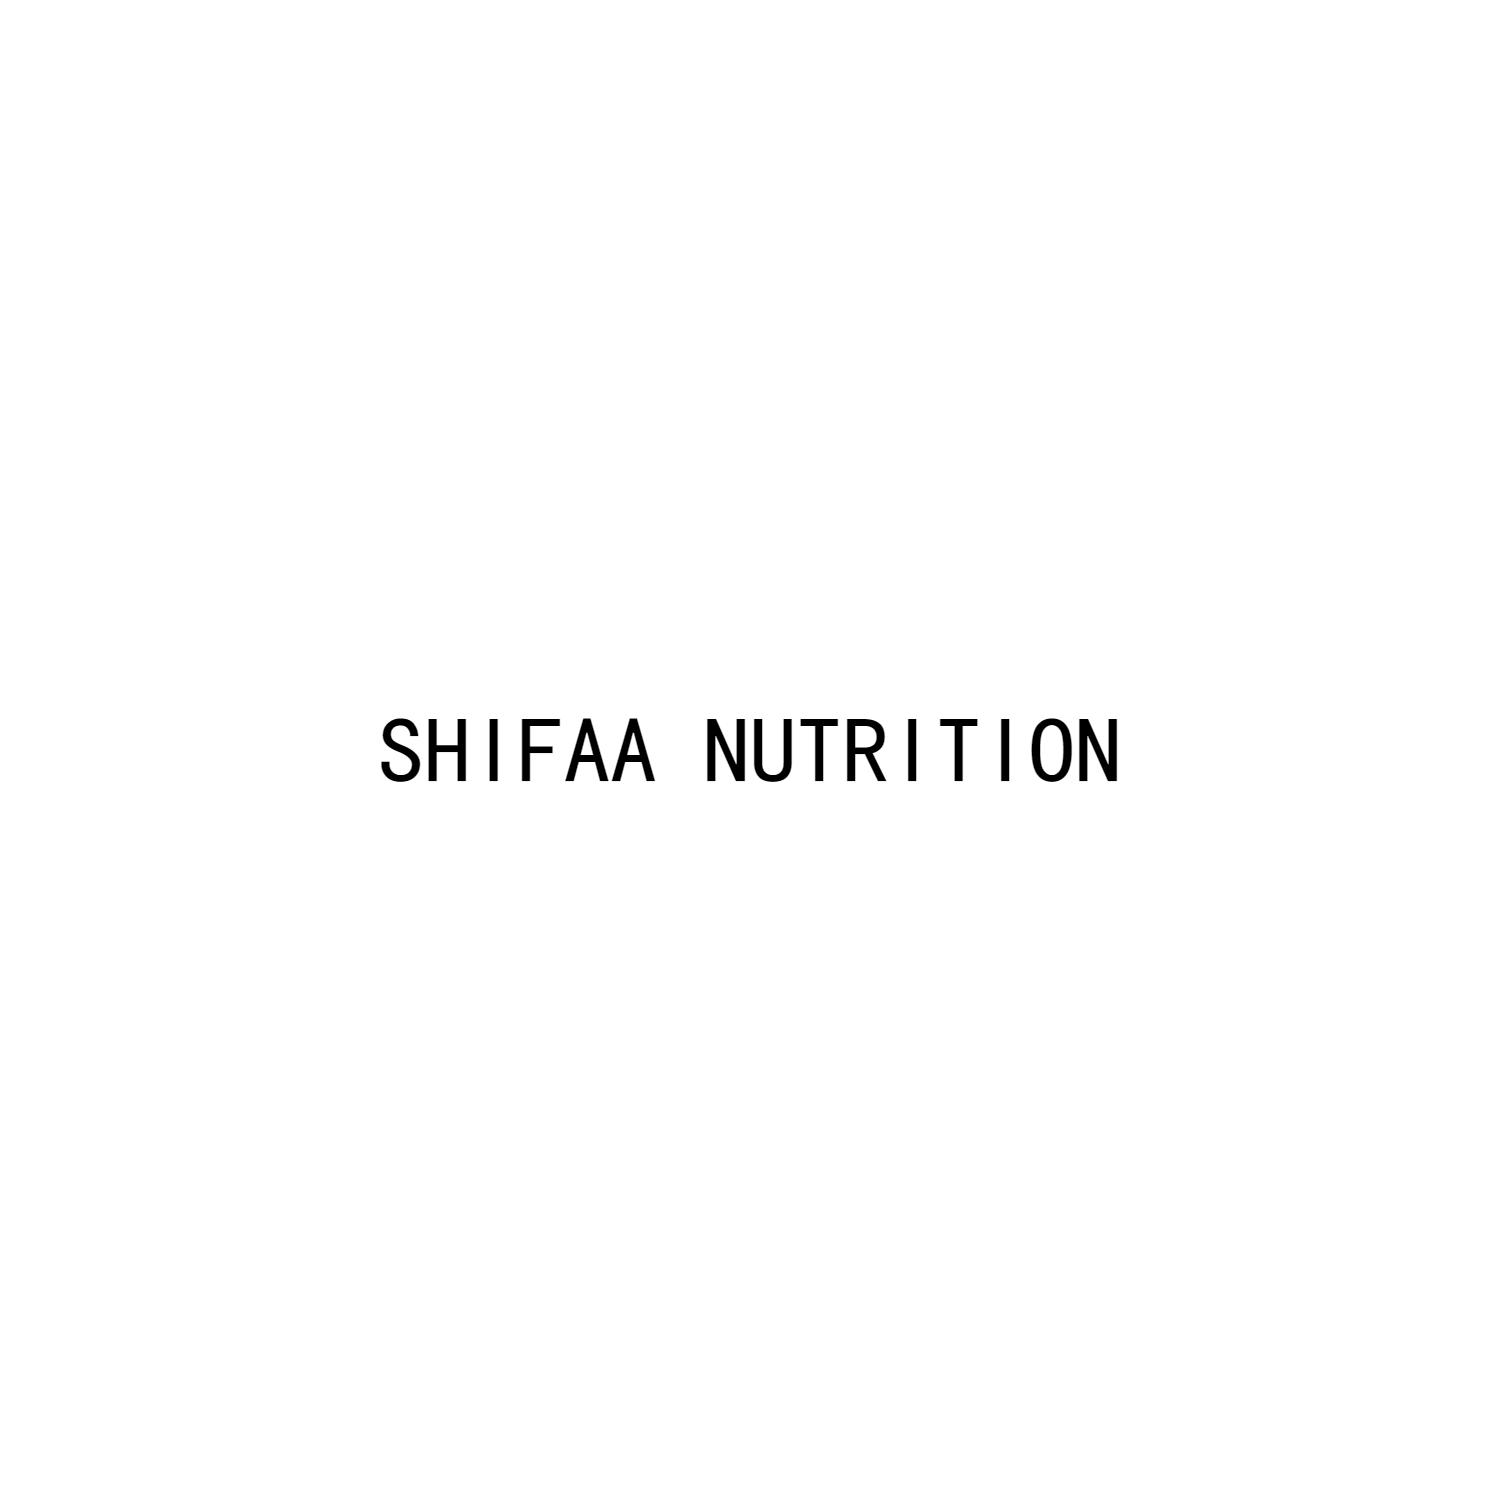 SHIFAA NUTRITION